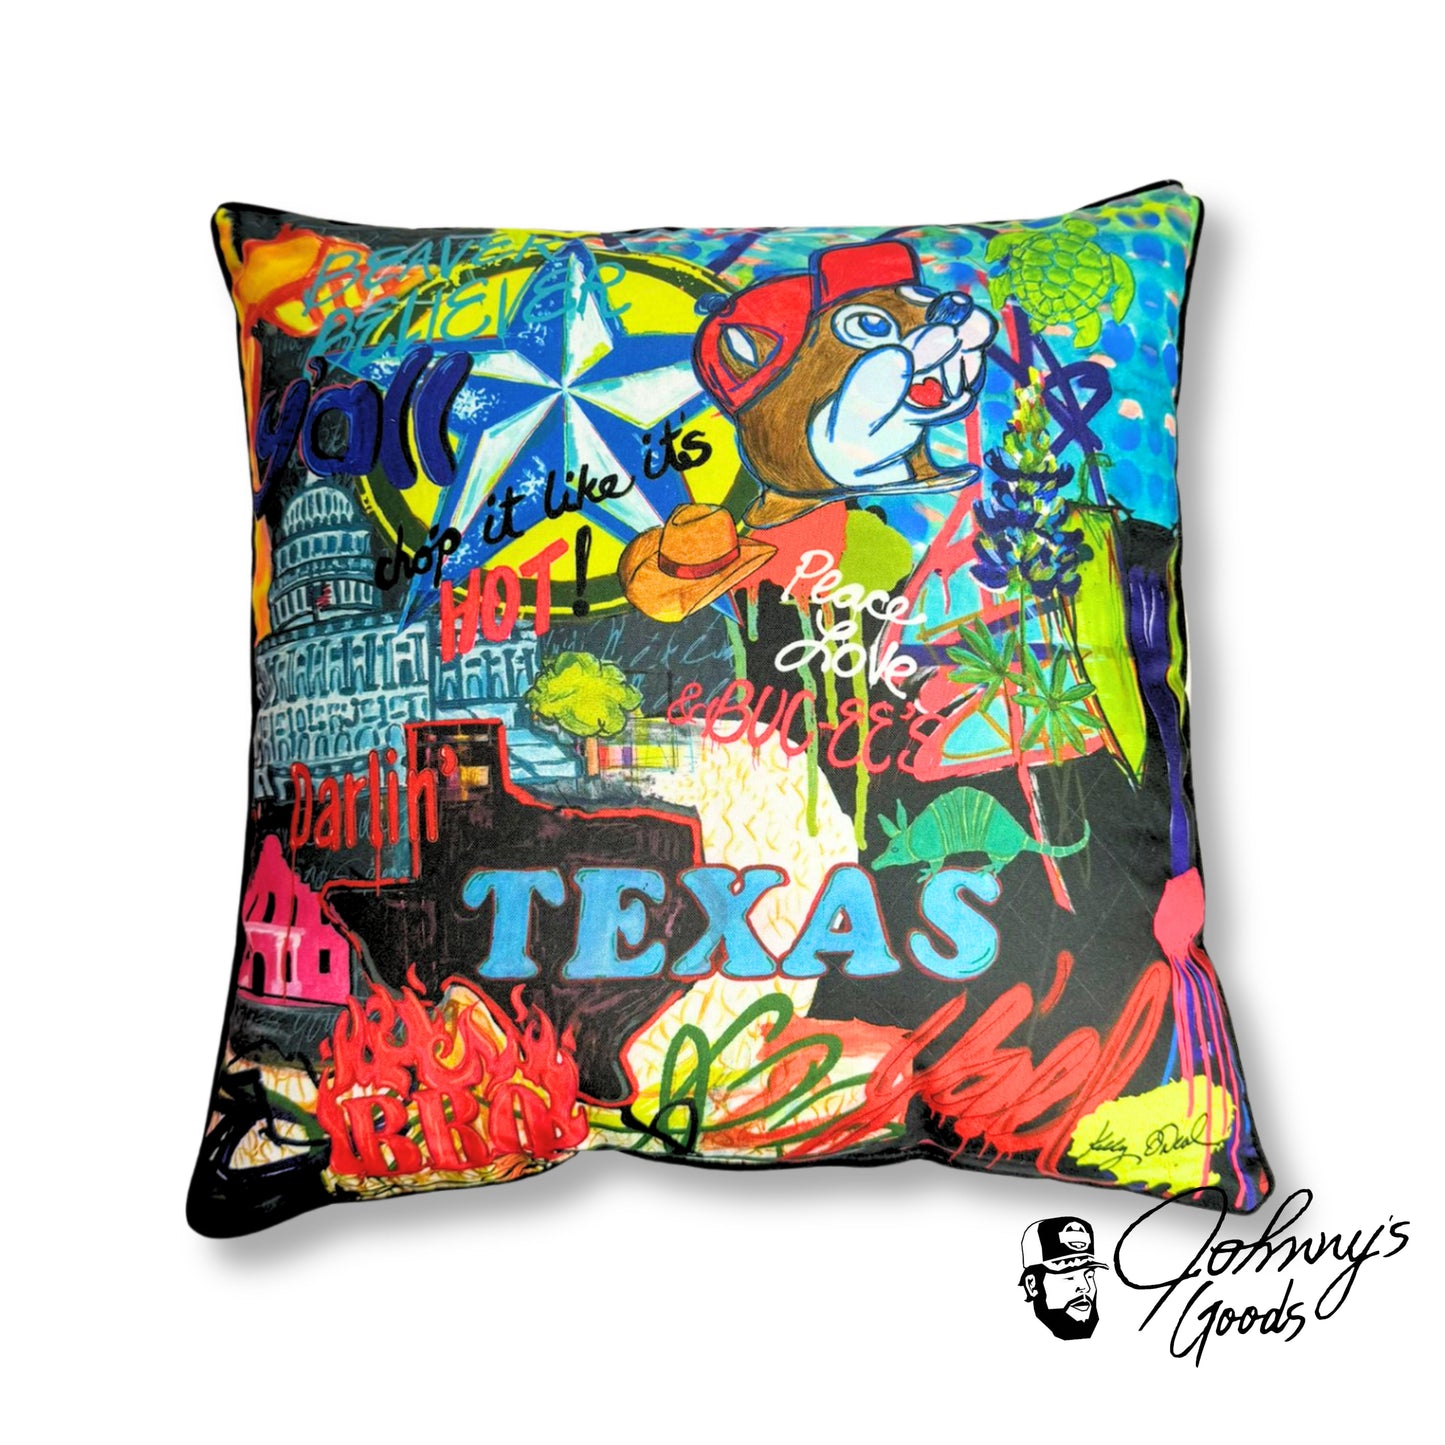 buccees decorative pillows texas pillow